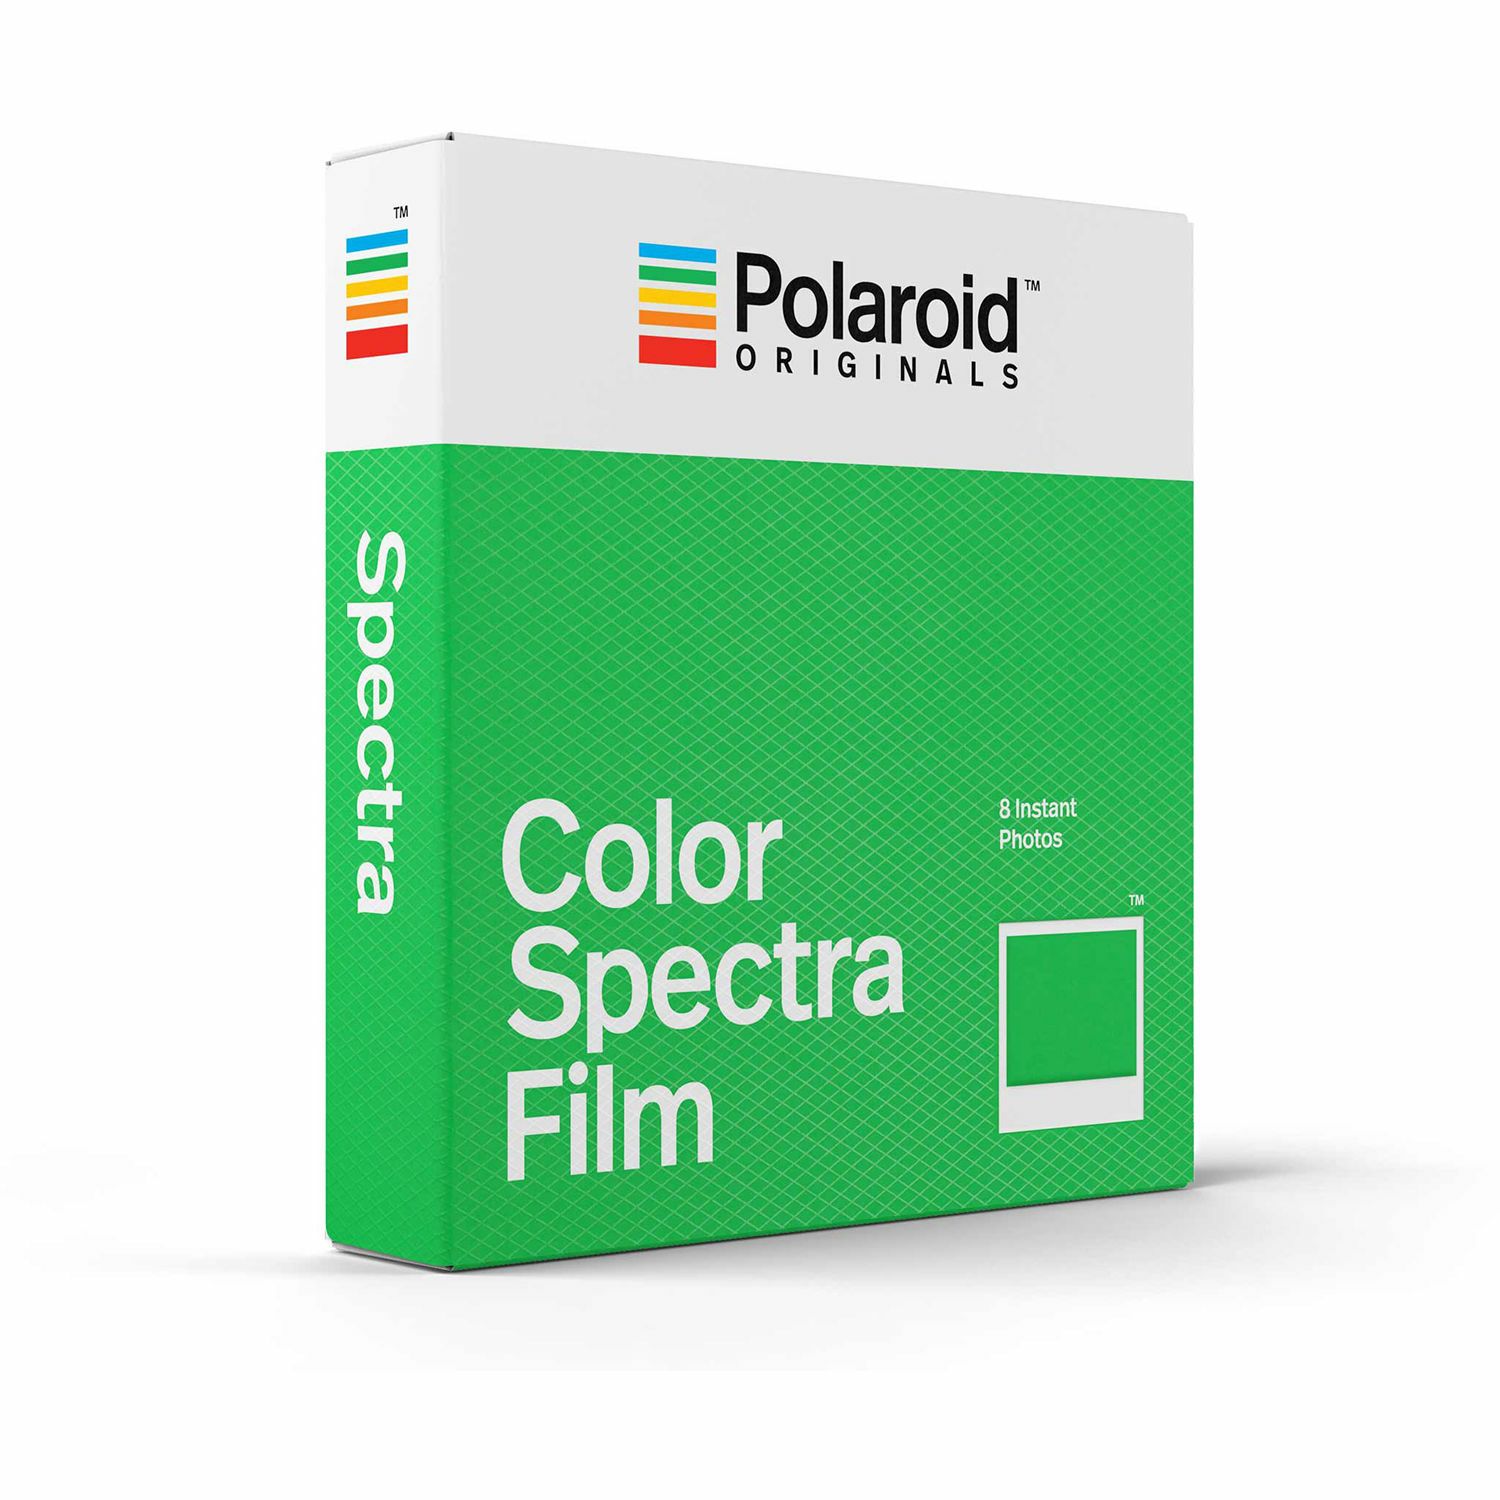 Polaroid Originals Color film for Image i Spectra Cameras papir za fotografije u boji za Instant fotoaparate (004678)